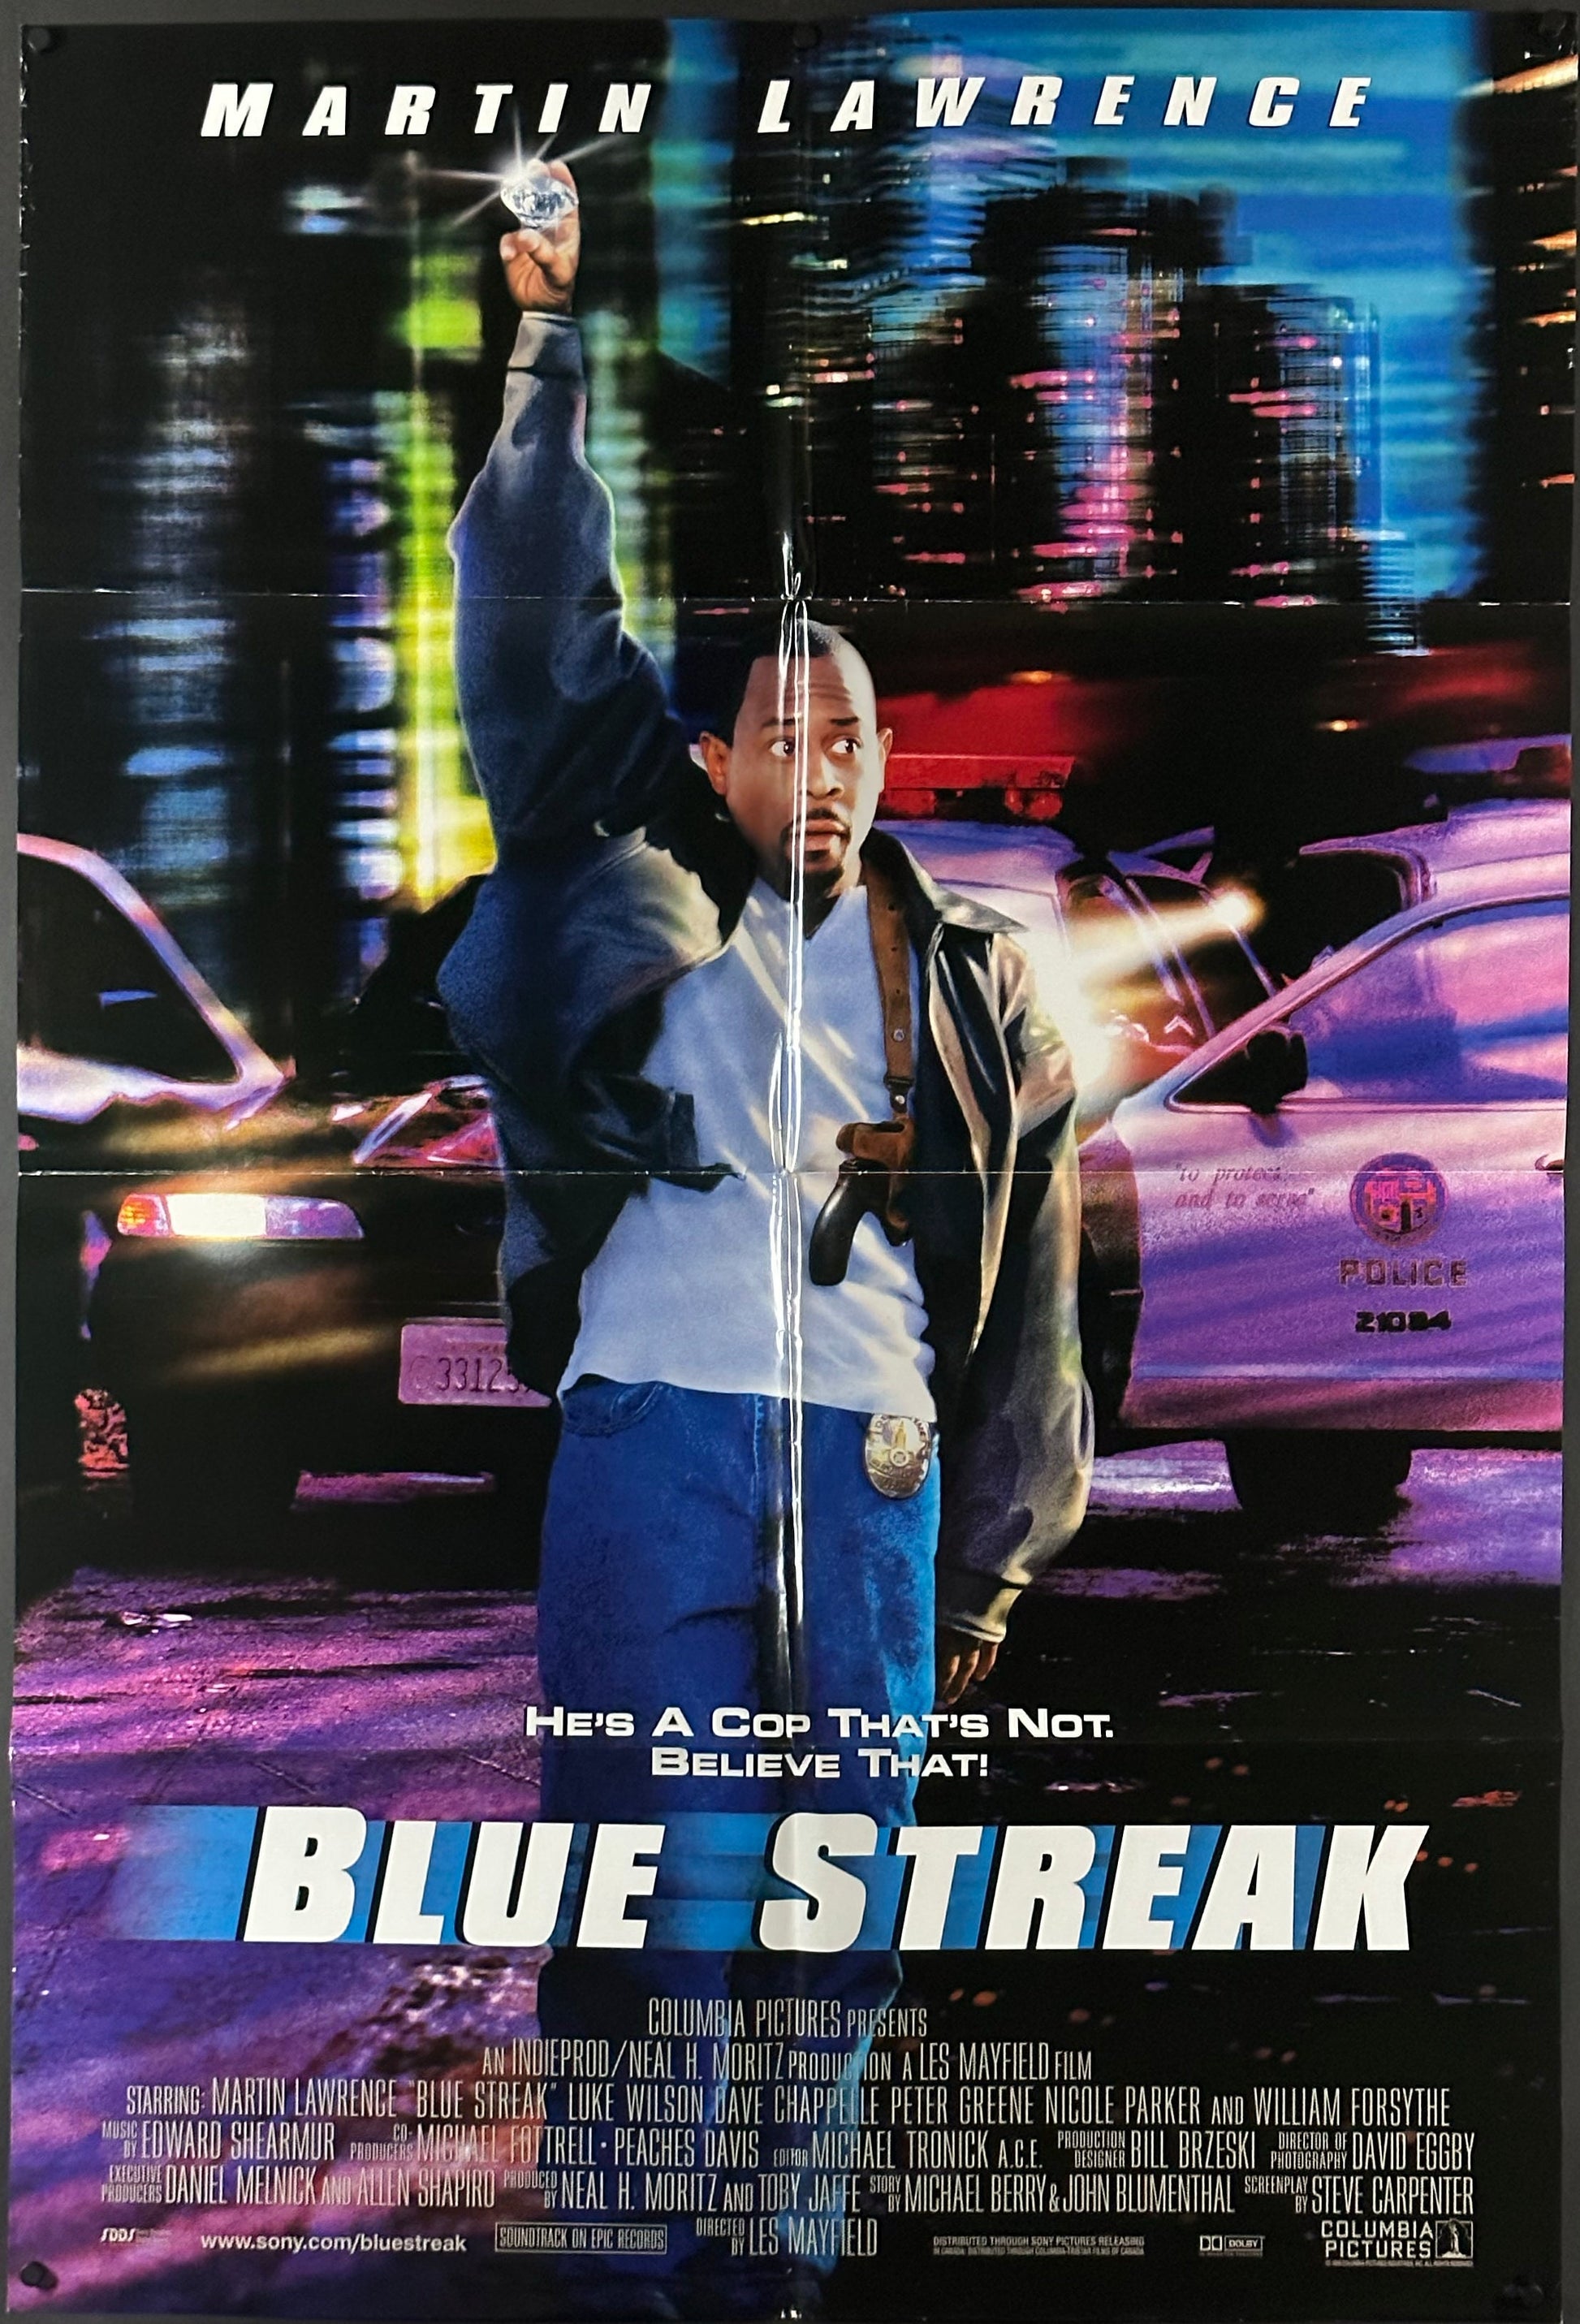 Blue Streak US One Sheet (1999) - ORIGINAL RELEASE - posterpalace.com